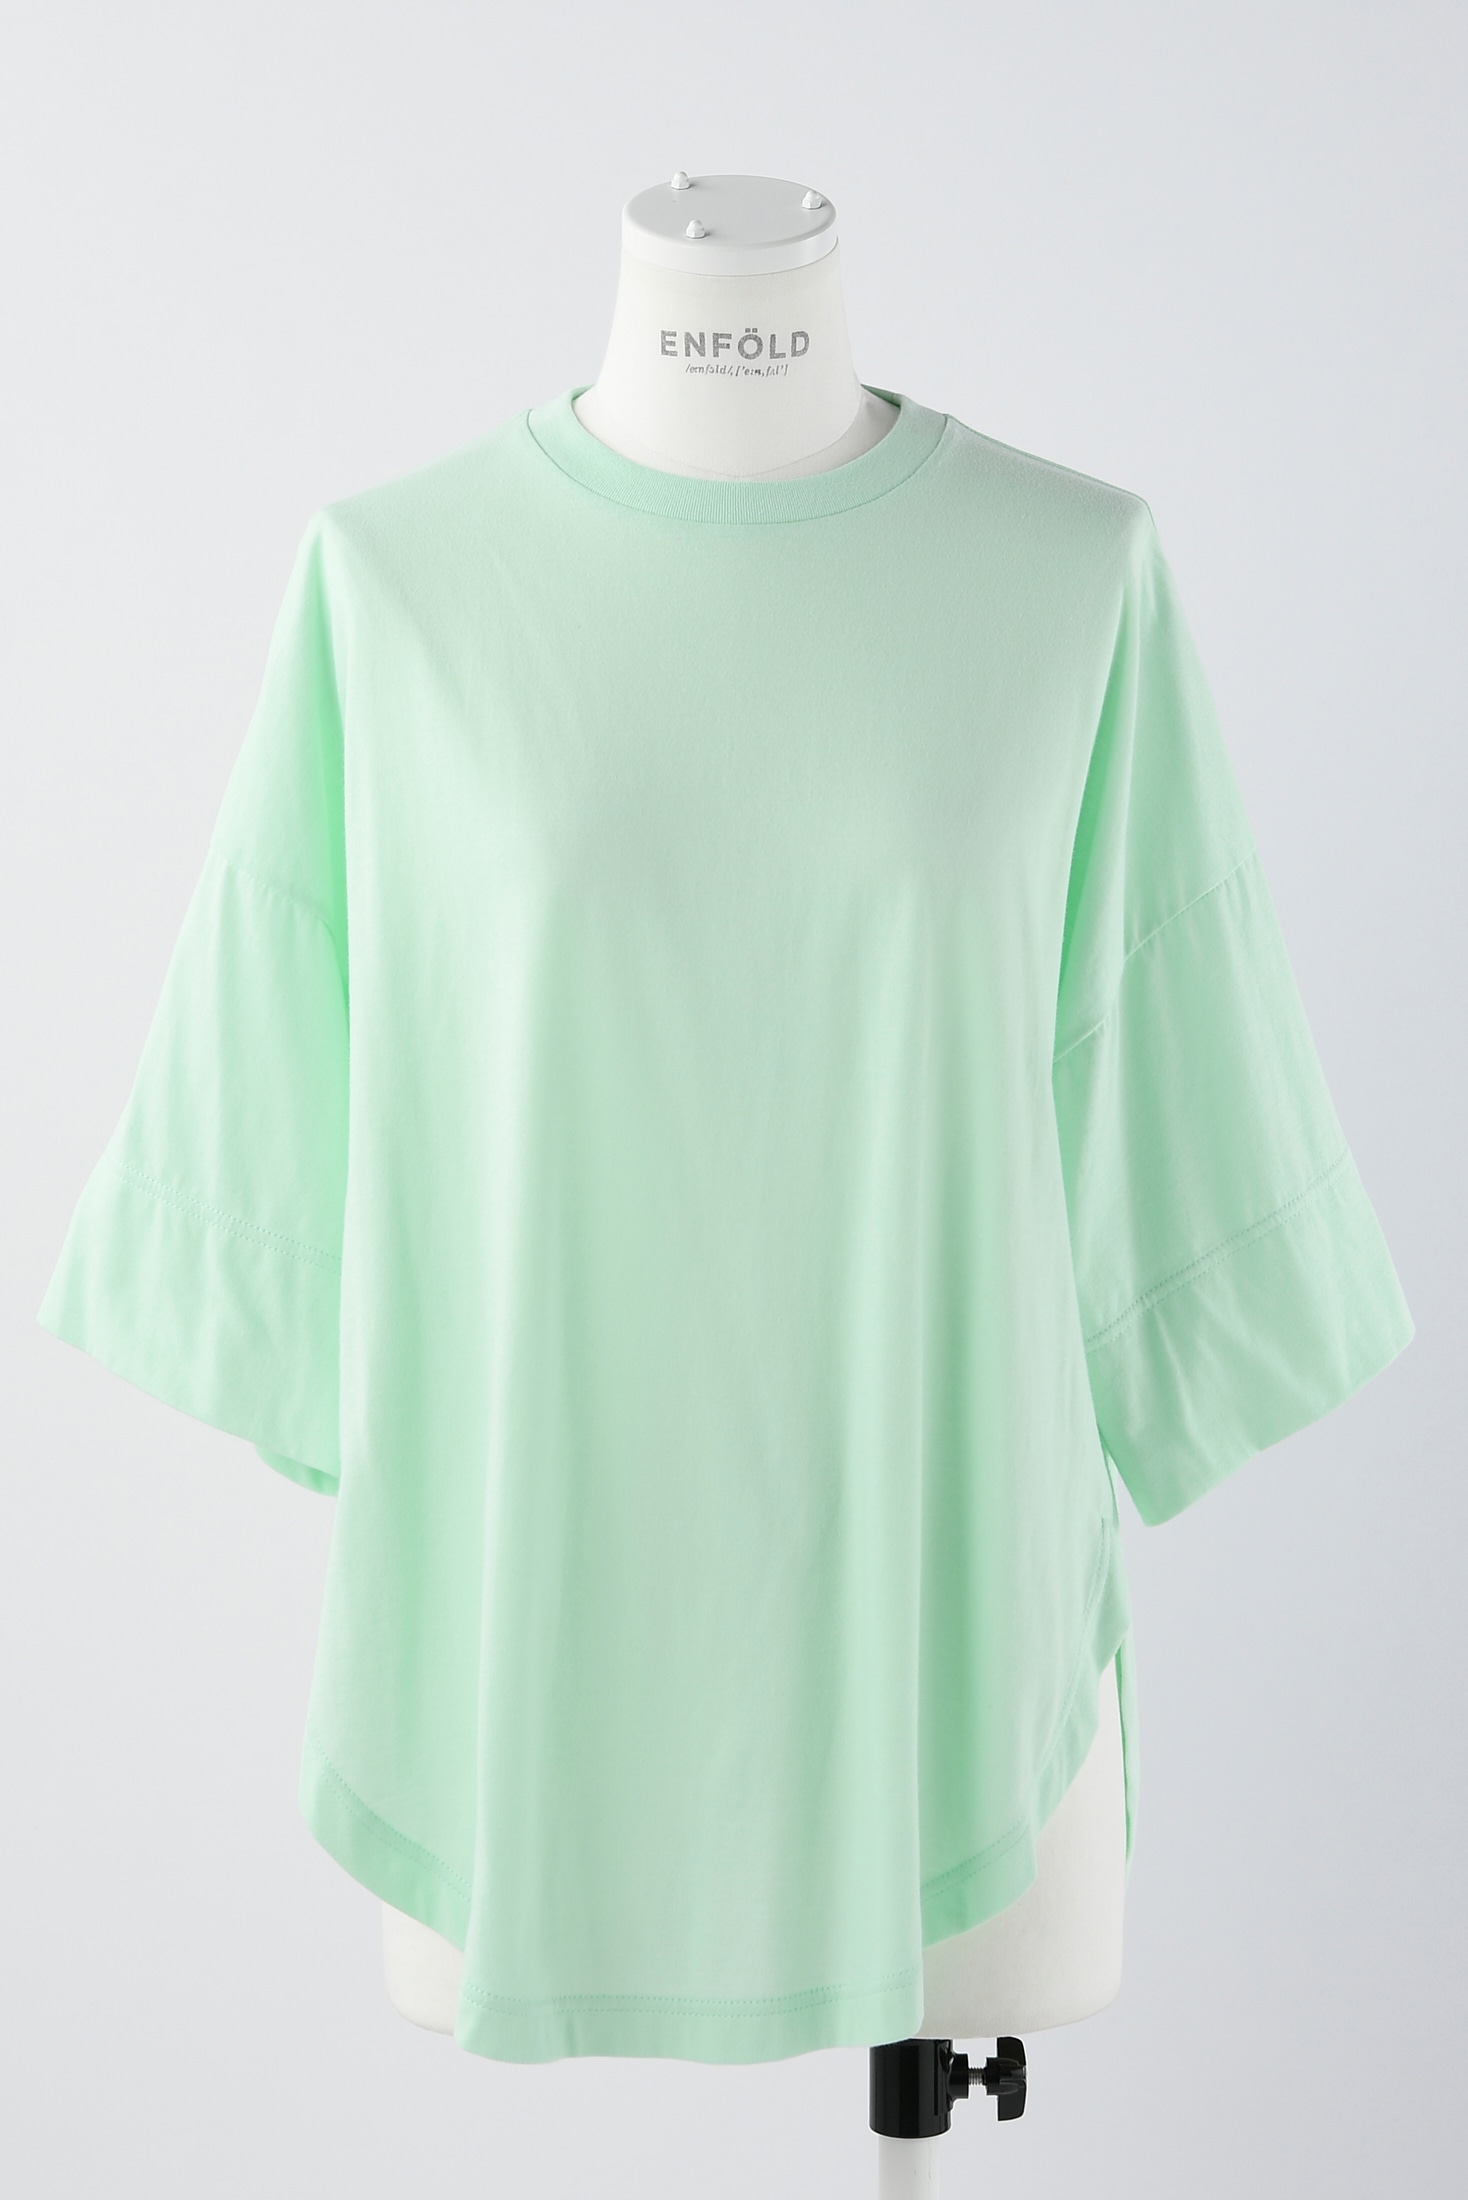 ENFOLD 38 L/MINT Tシャツ - Tシャツ/カットソー(半袖/袖なし)